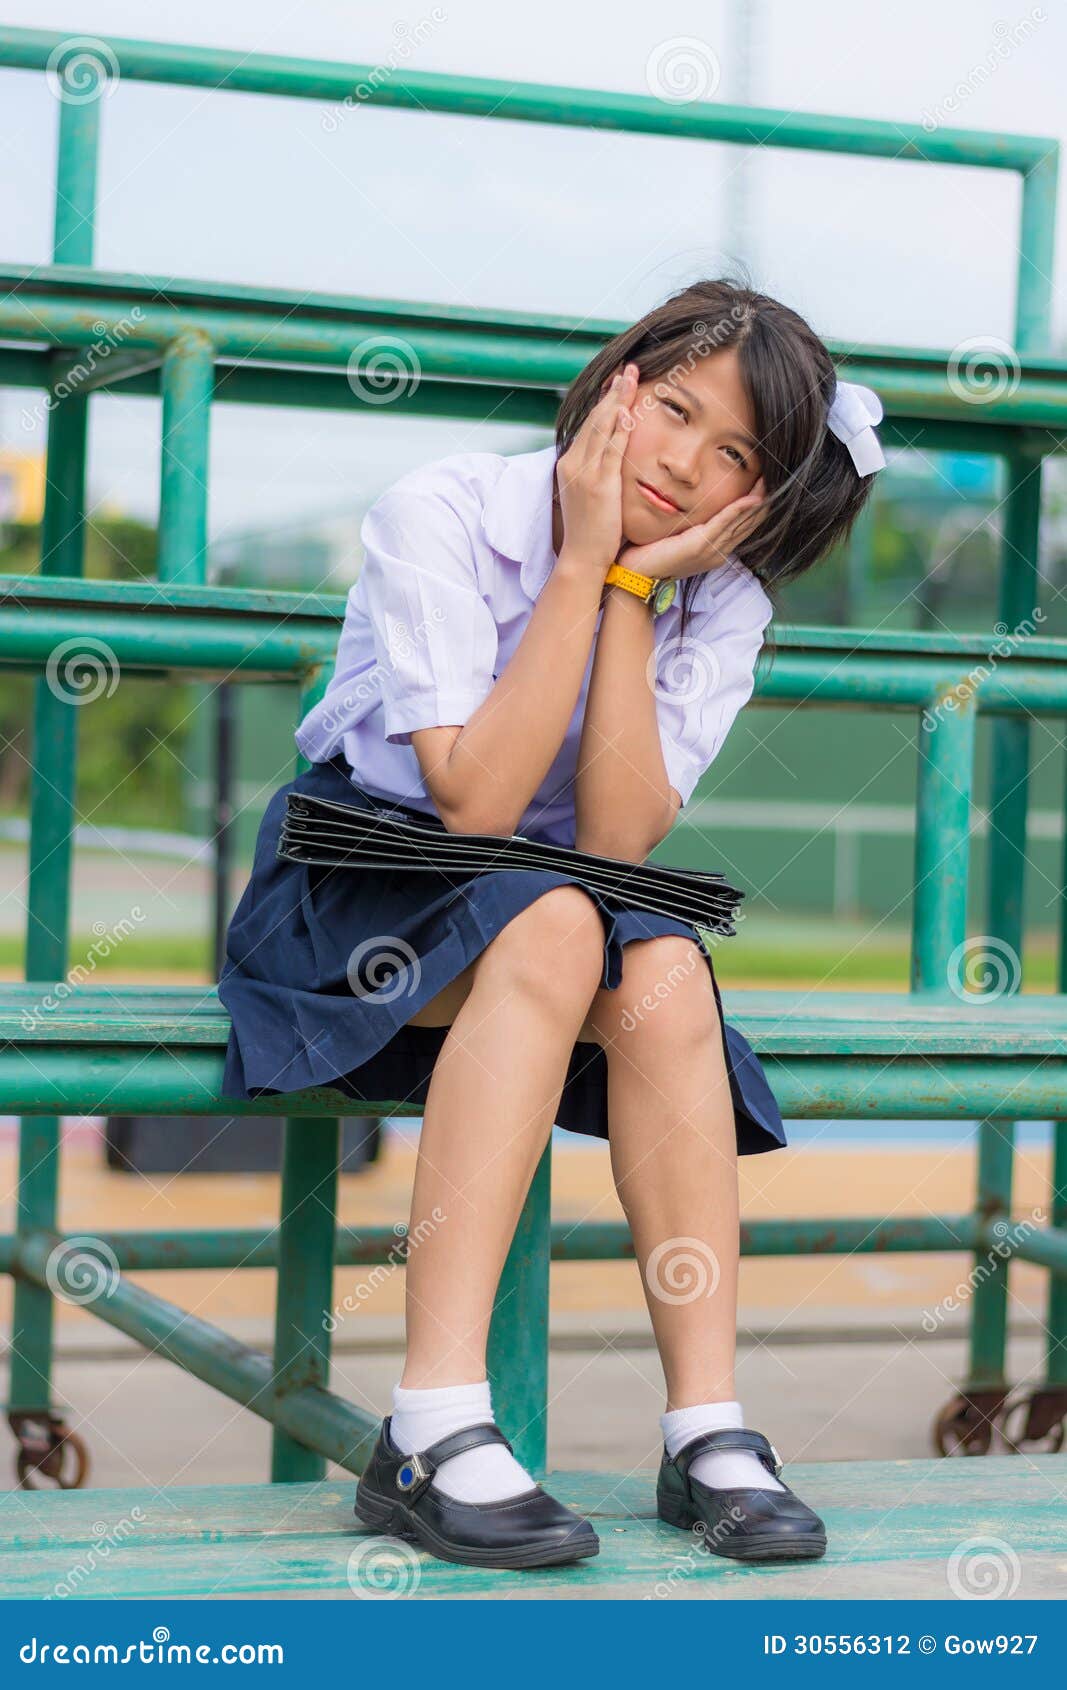 uniform Asian chicktrainer outdoor